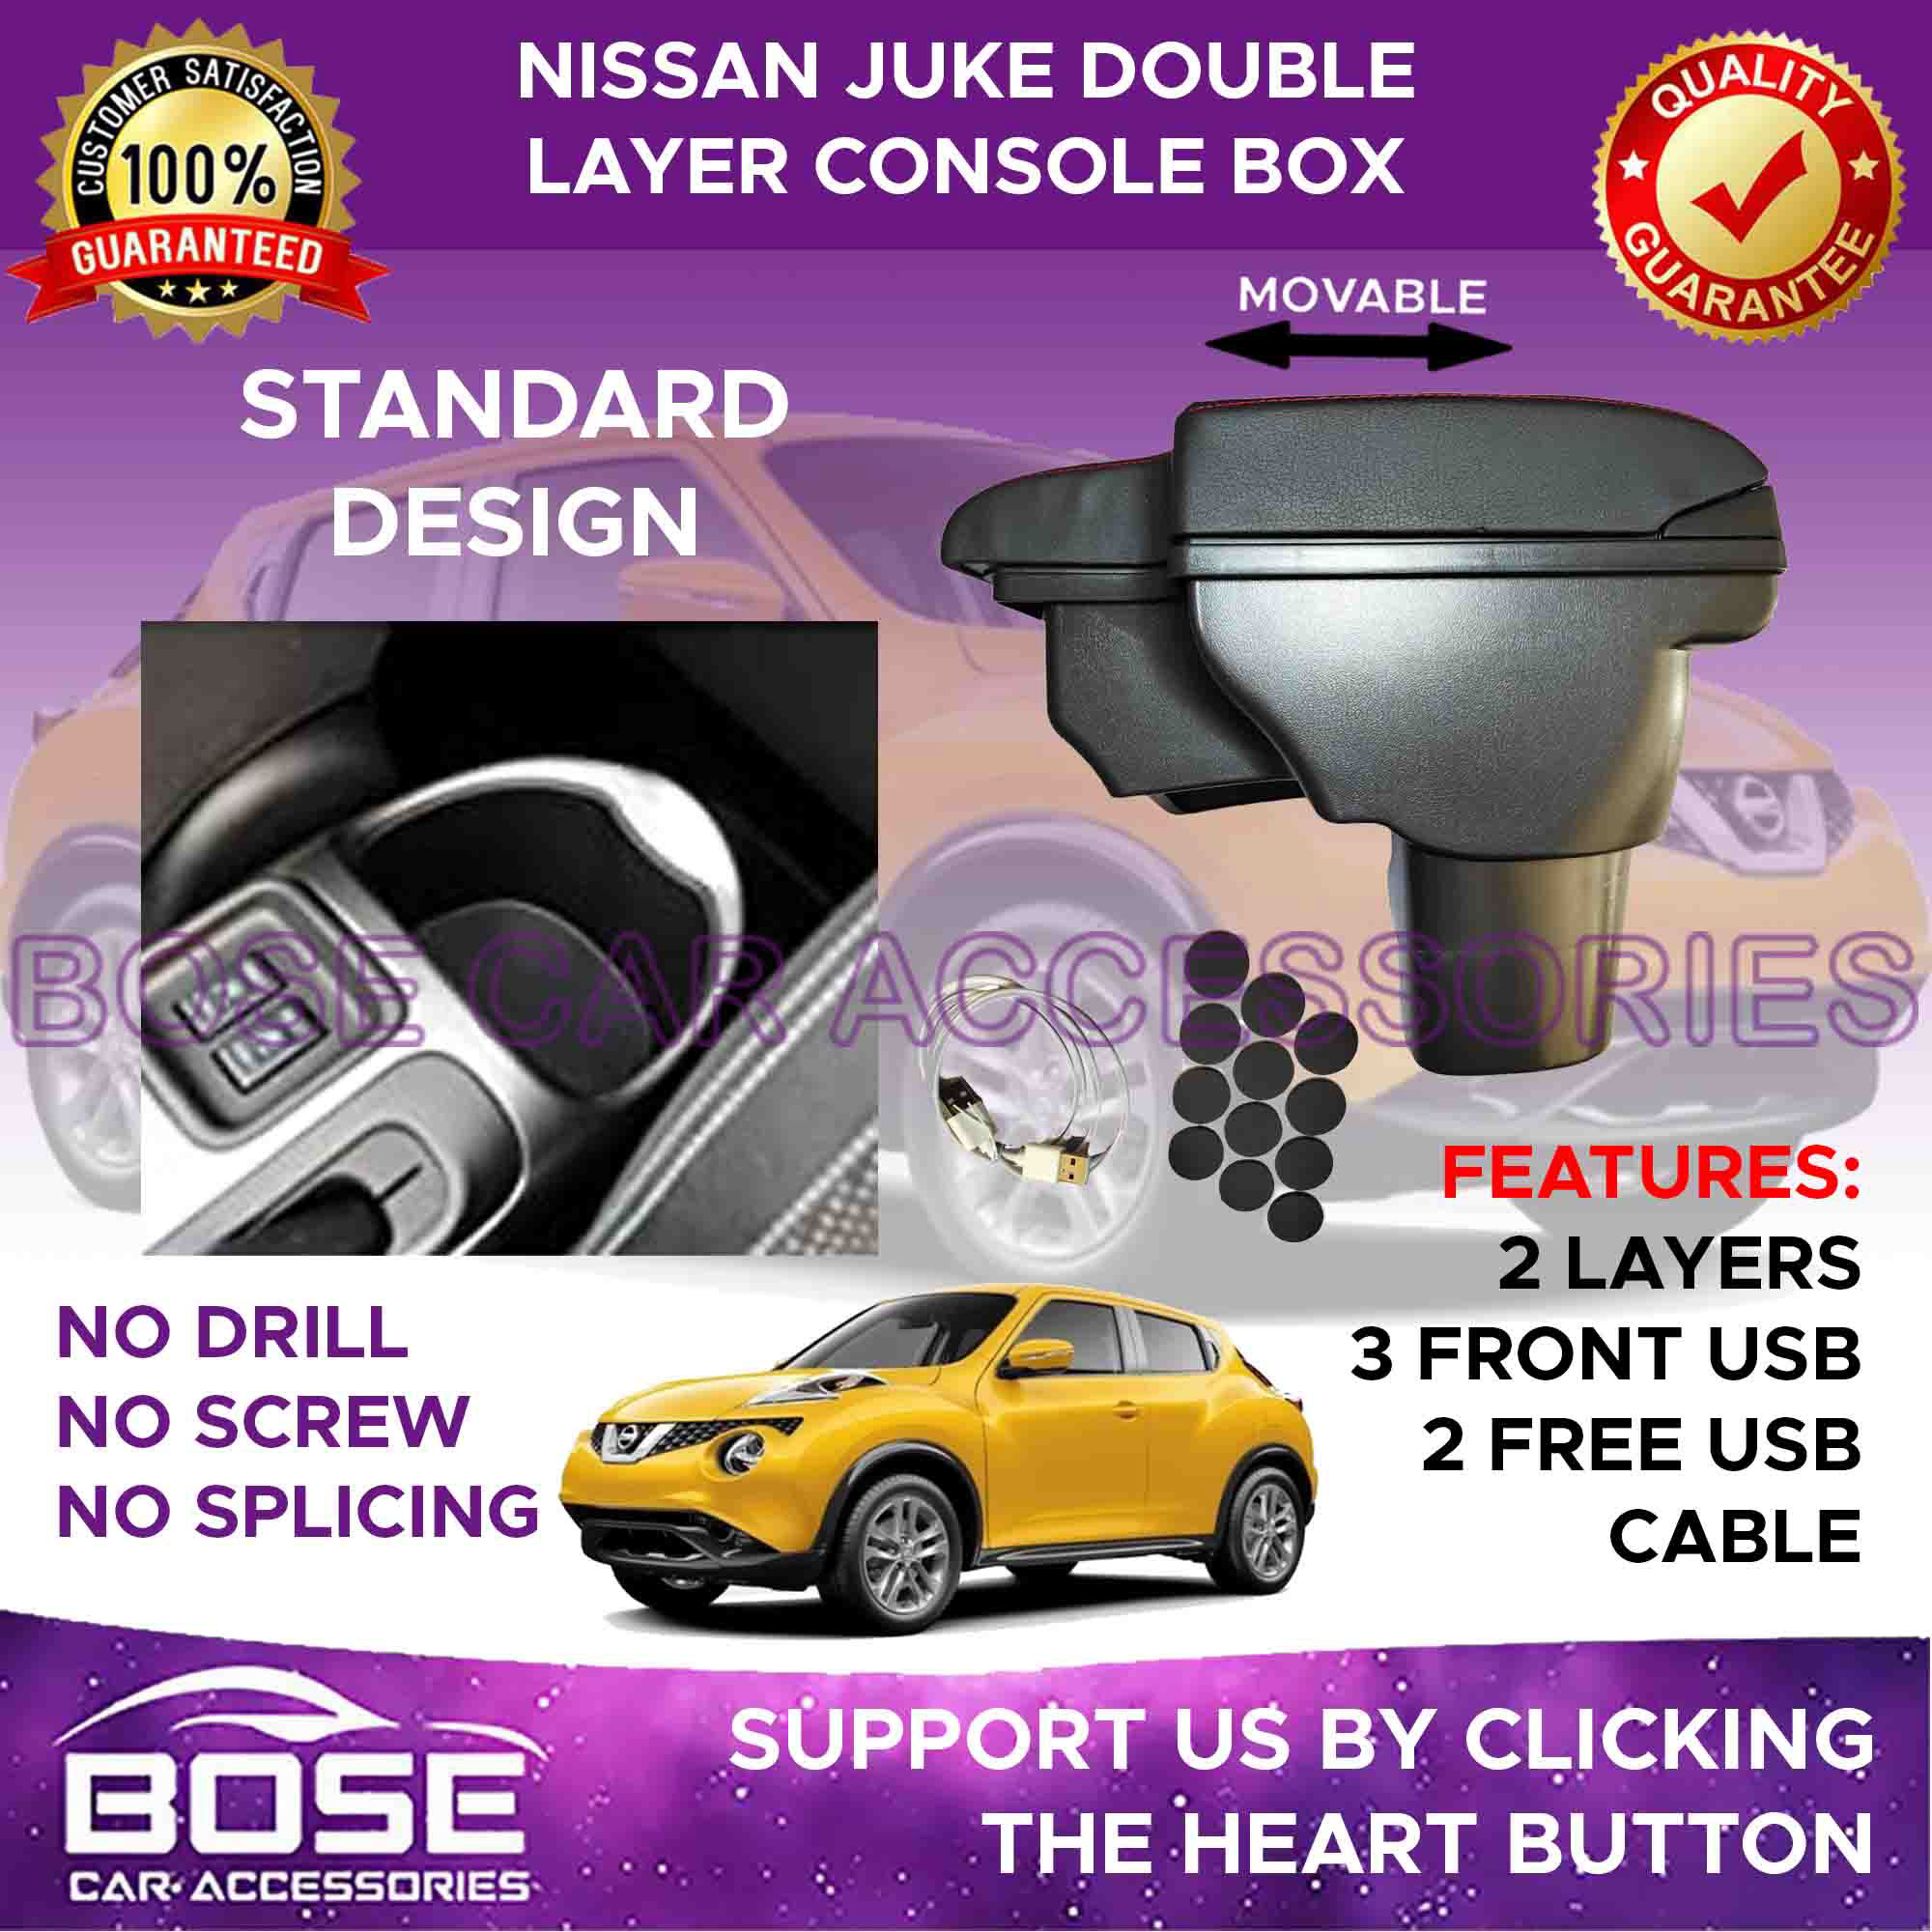 NISSAN JUKE 2017 2018 2019 2020 2021 CONSOLE BOX ARMREST DOUBLE LAYER /  Accessories / Console Box Premium / Armrest For Car / Accessories / Arm  Rest for Car / Console Box Double Layer